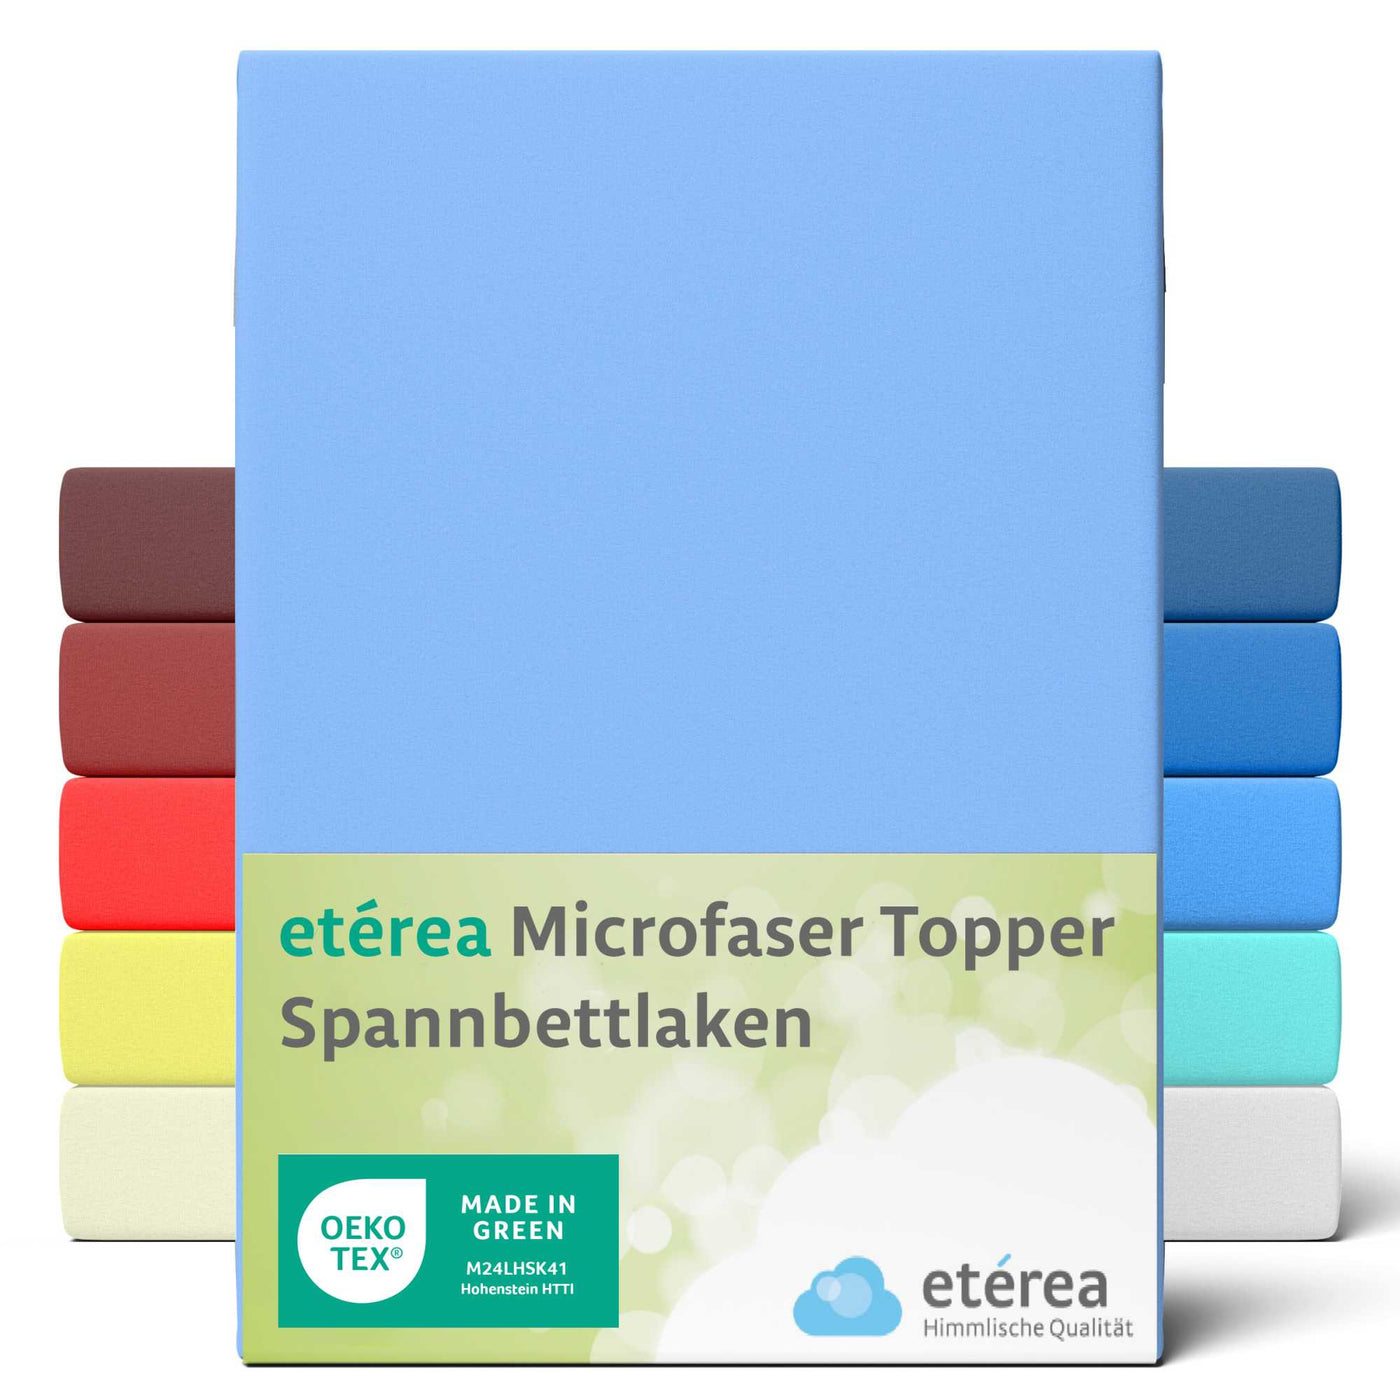 etérea Microfaser Topper Spannbettlaken #farbe_hellblau